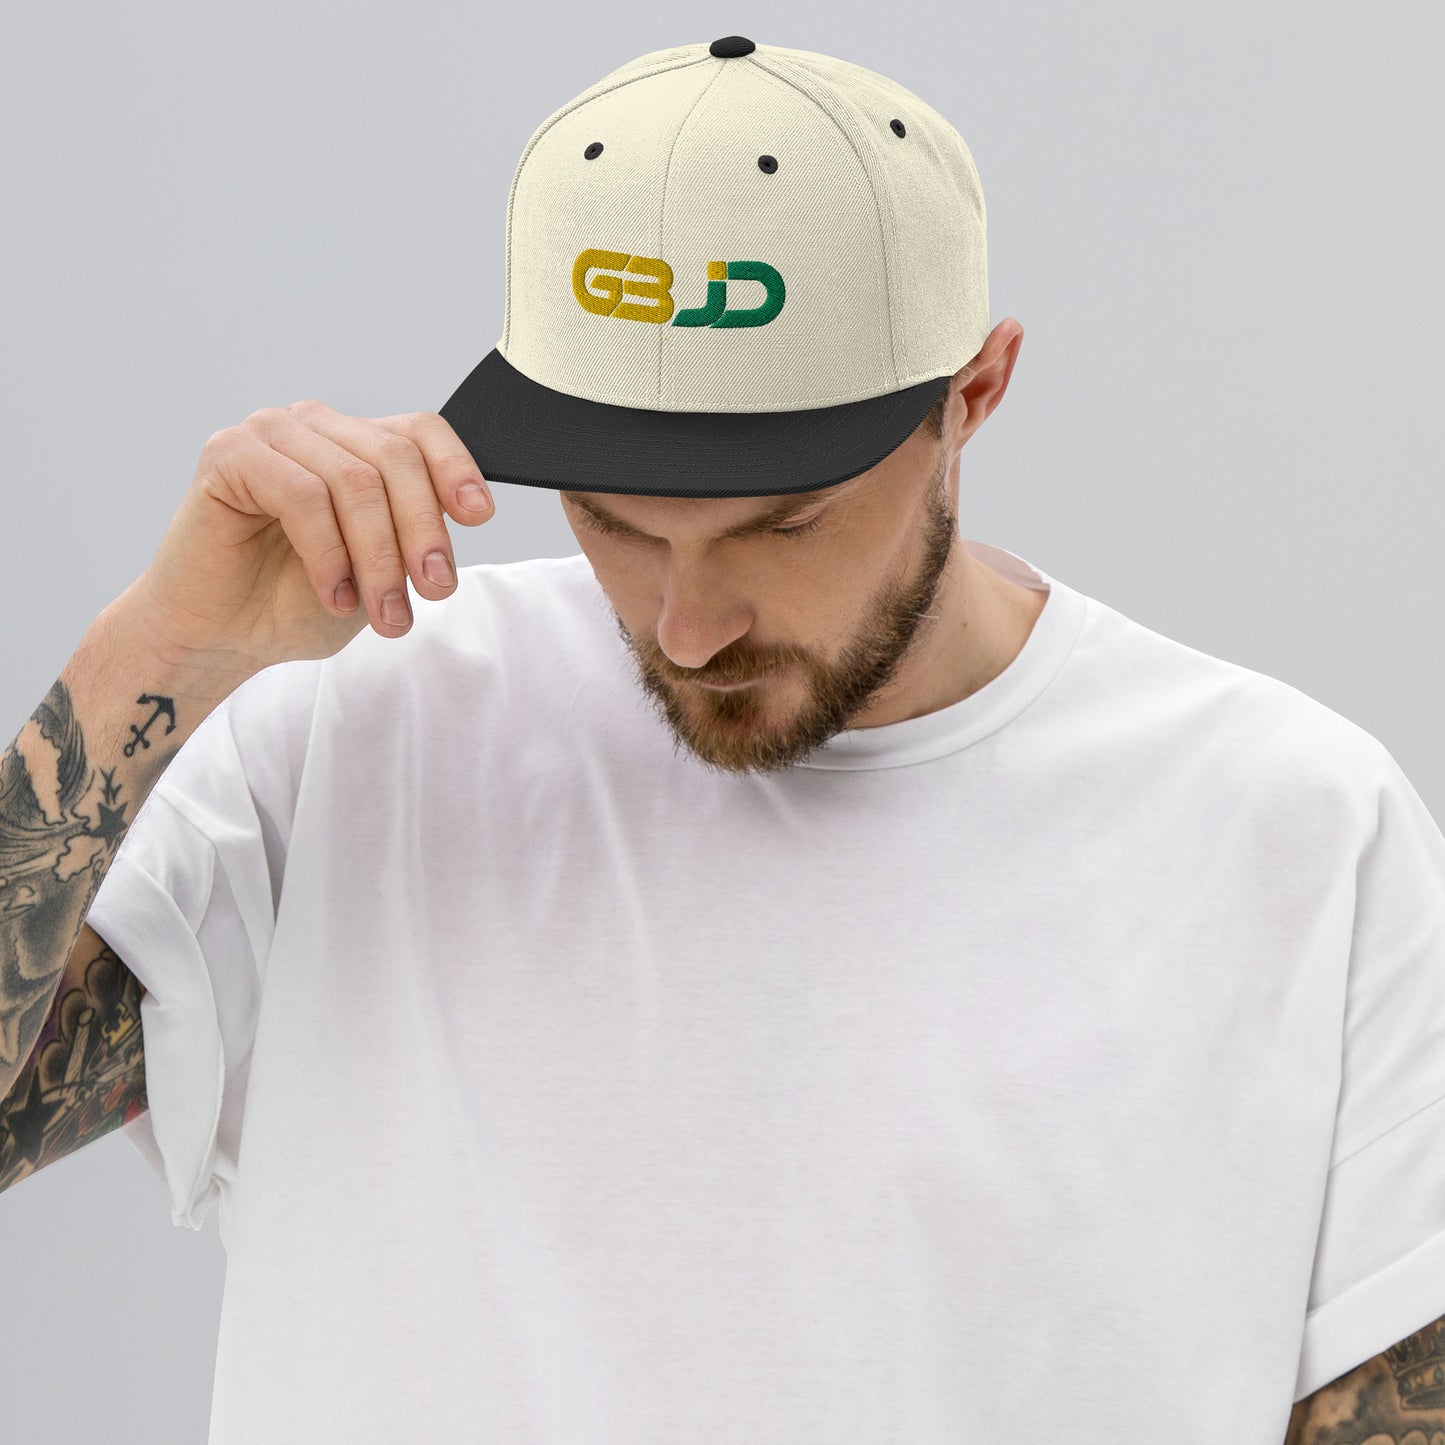 GBJD Snapback Hat